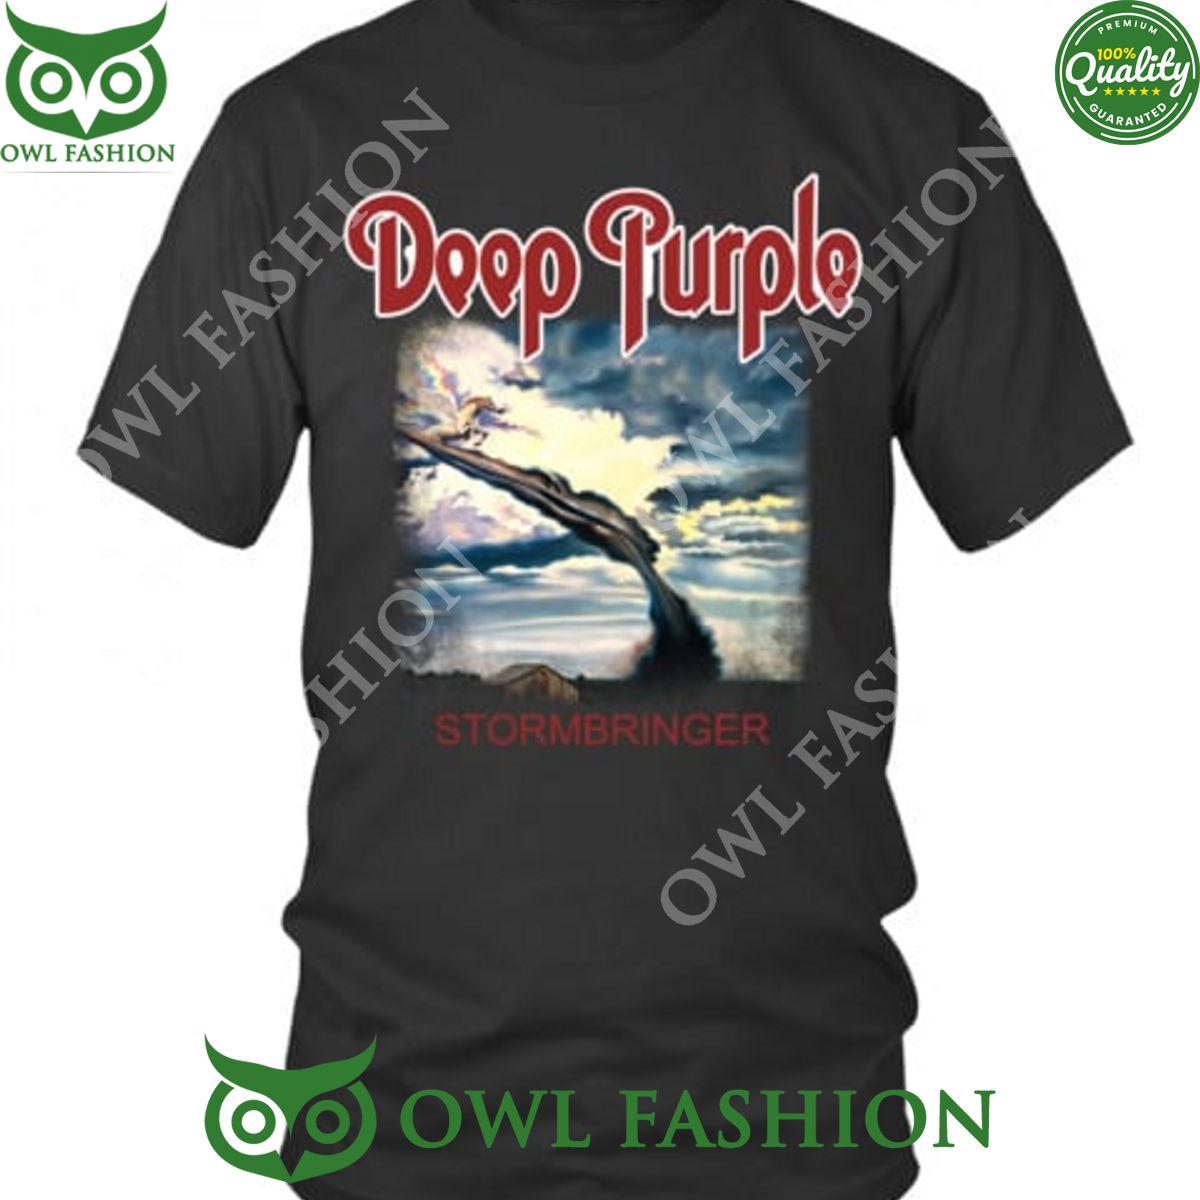 Deep Purple Stormbringer Rock Band Album t shirt Loving, dare I say?